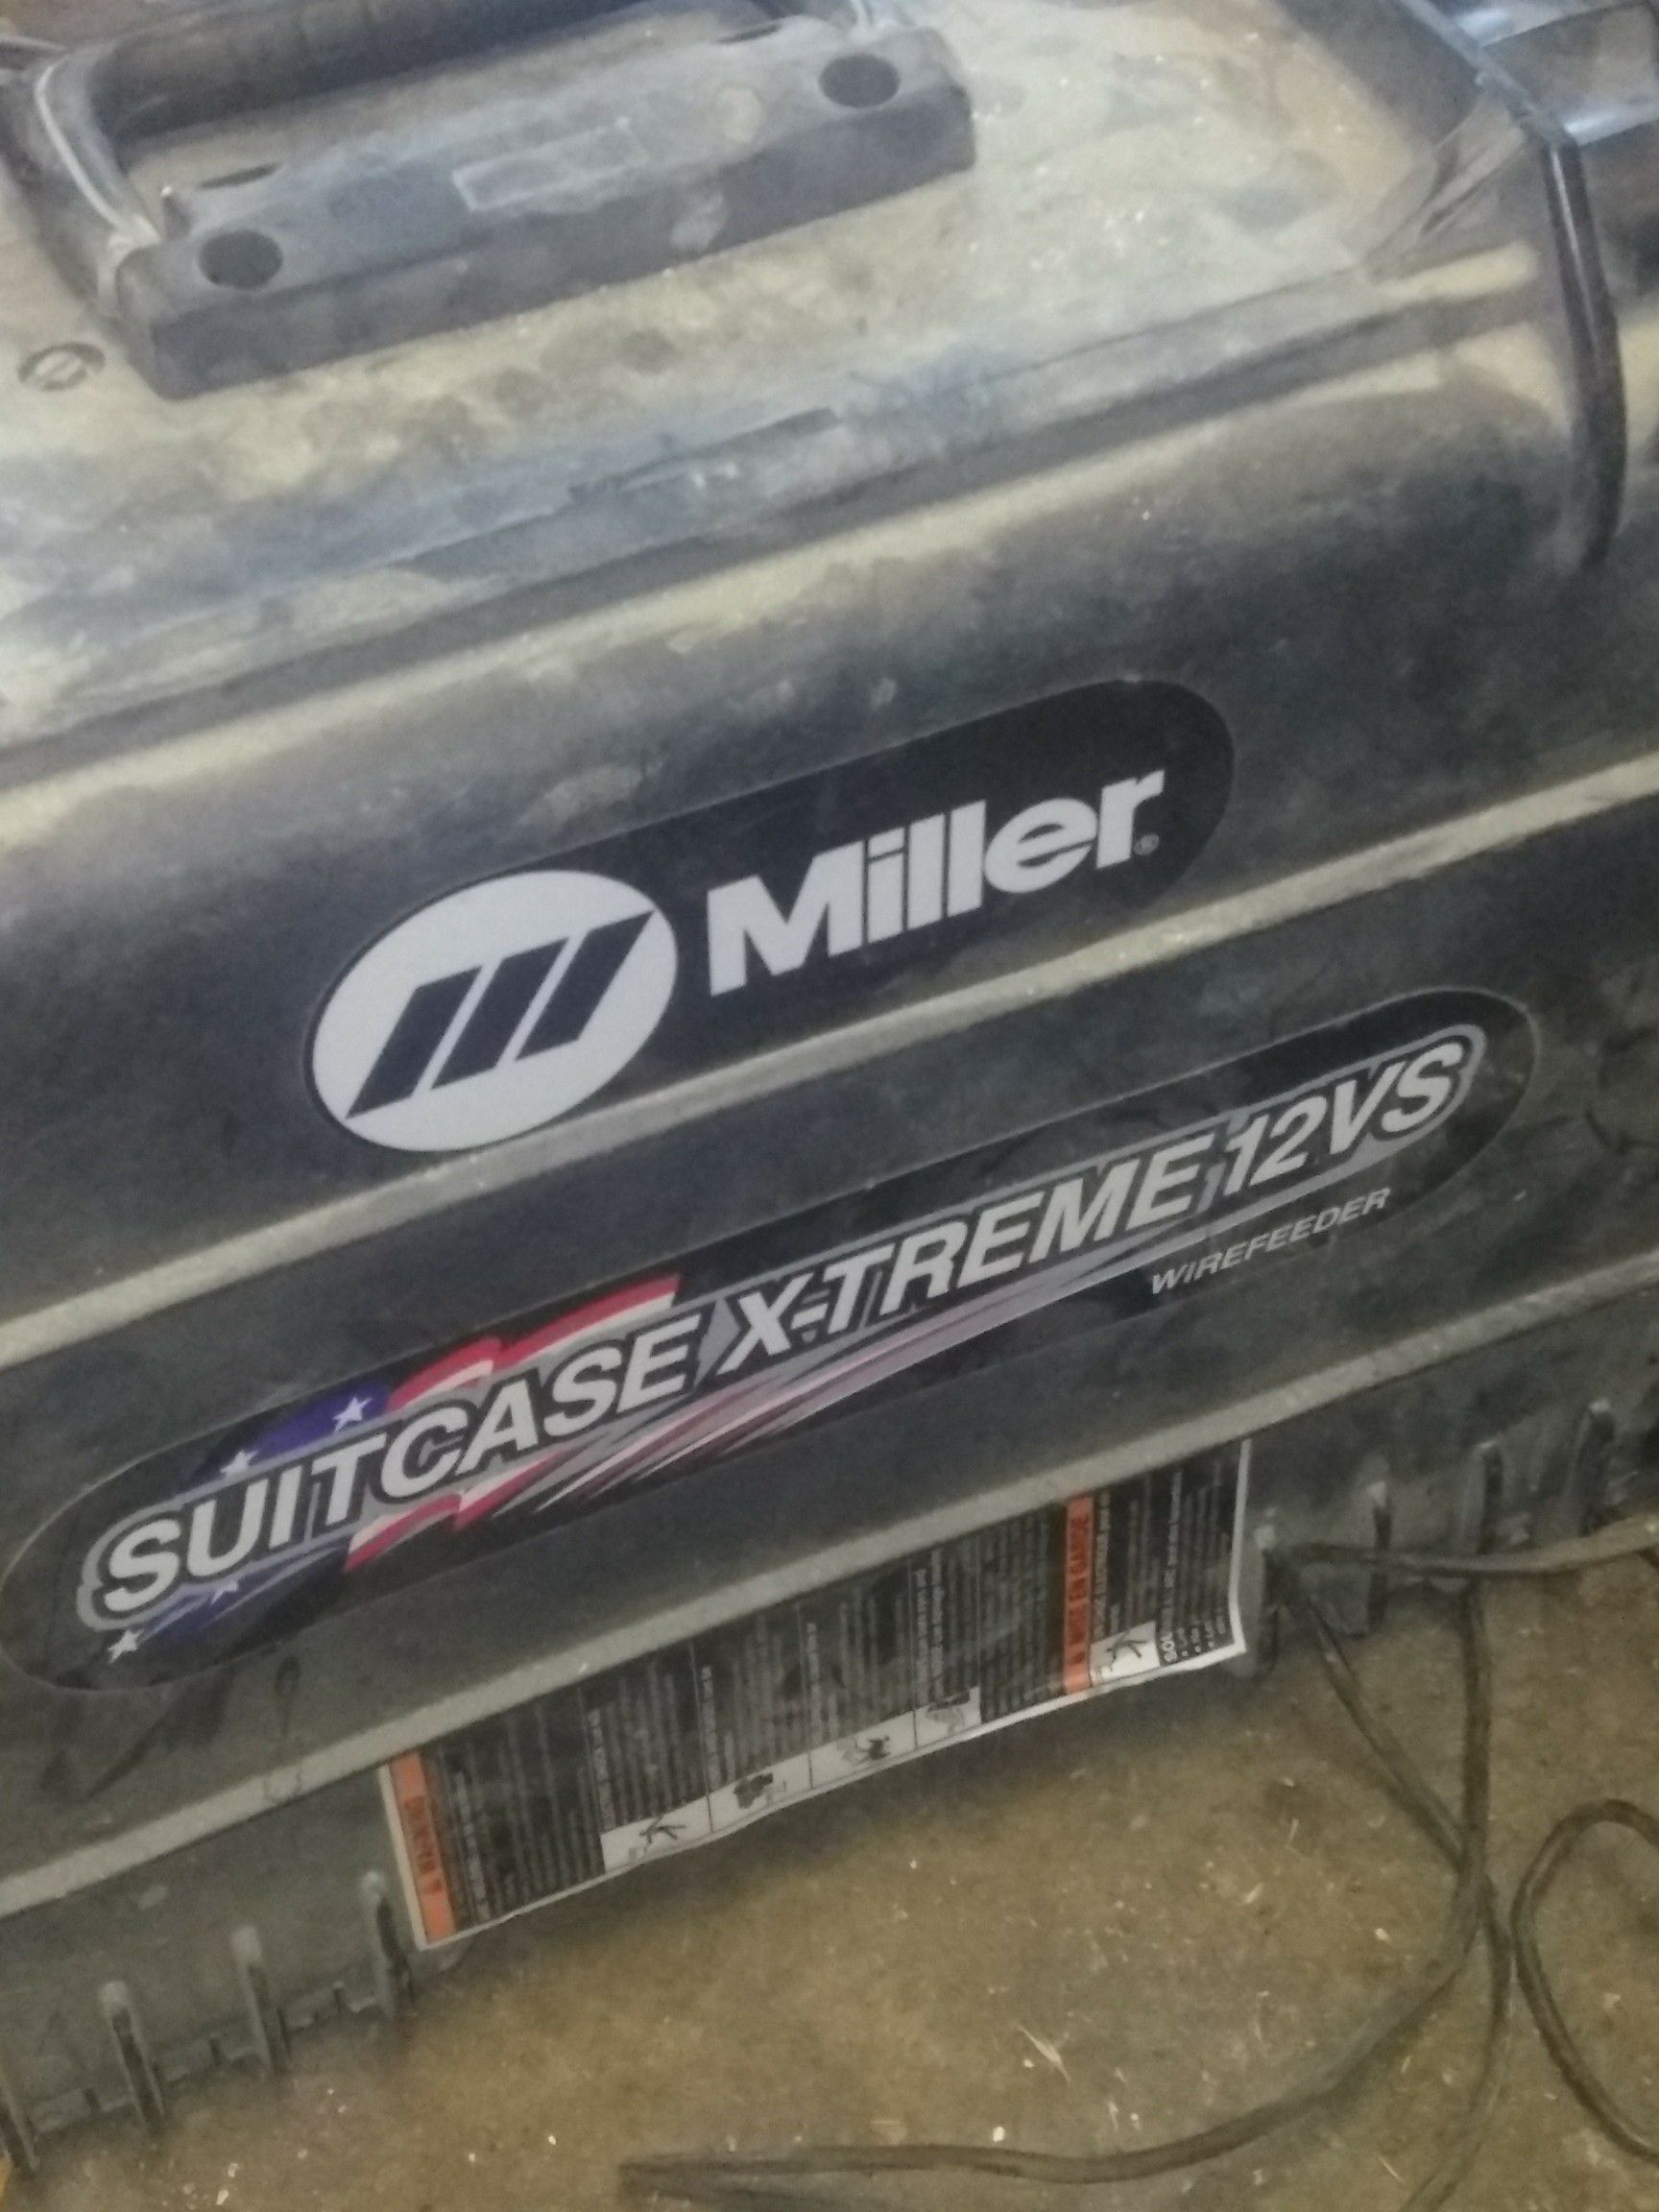 Miller suitcase x-treme 12 vs